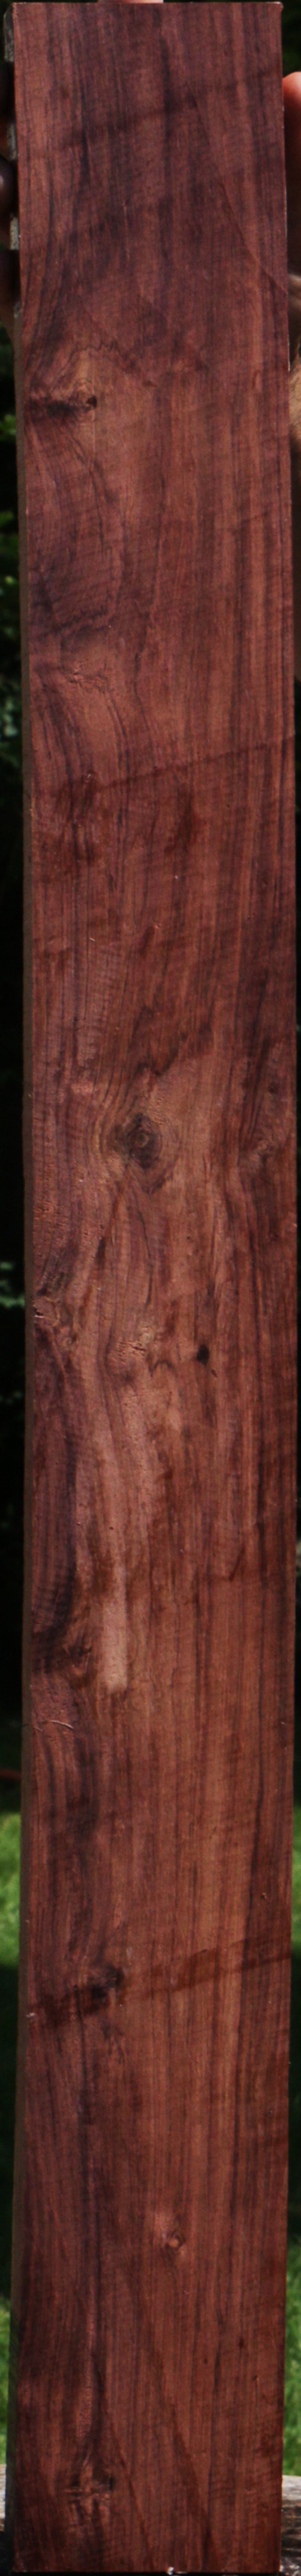 Extra Fancy Honduras Rosewood Lumber